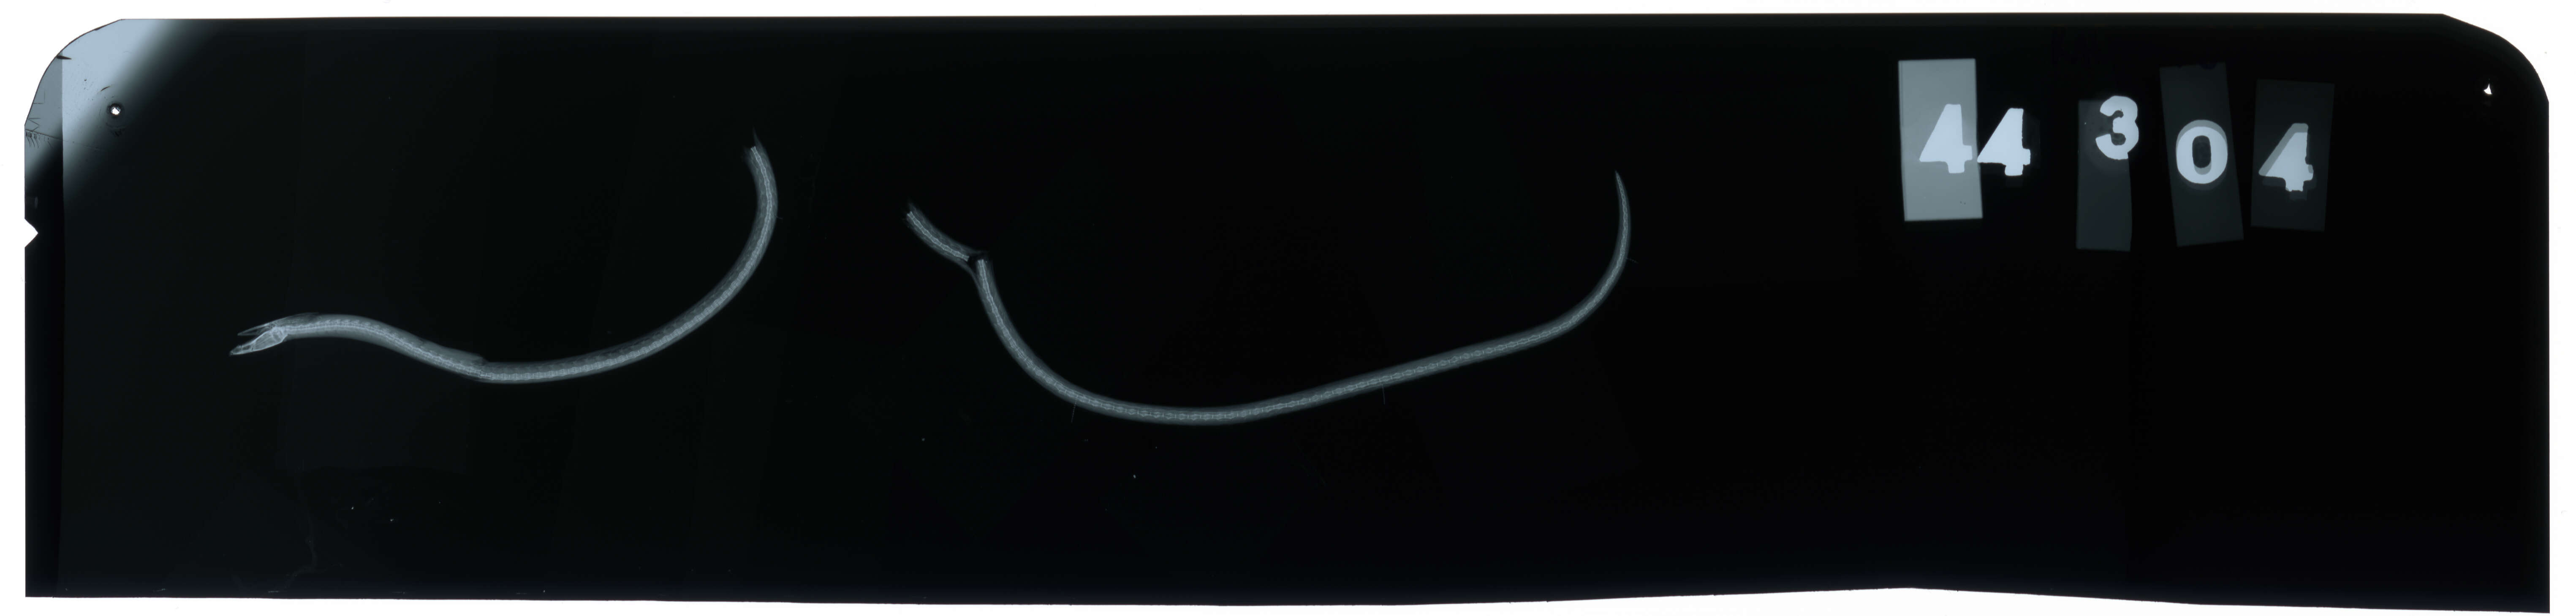 Image of Finless eel